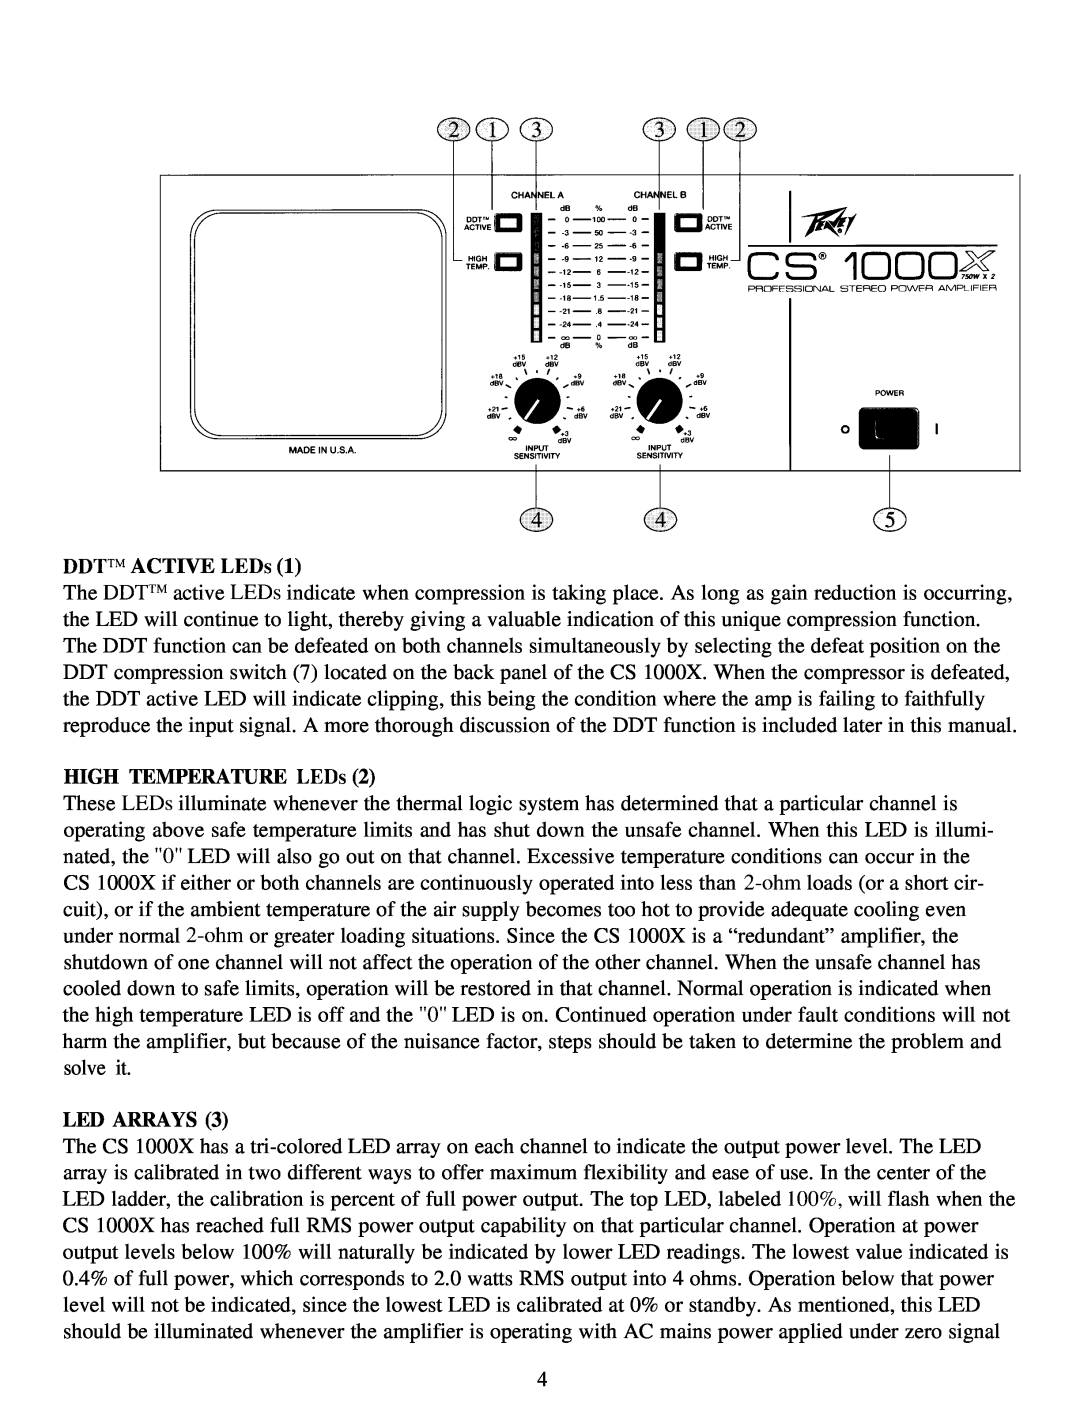 Peavey CS 1000X manual DDTTM ACTIVE LEDs, HIGH TEMPERATURE LEDs, Led Arrays 